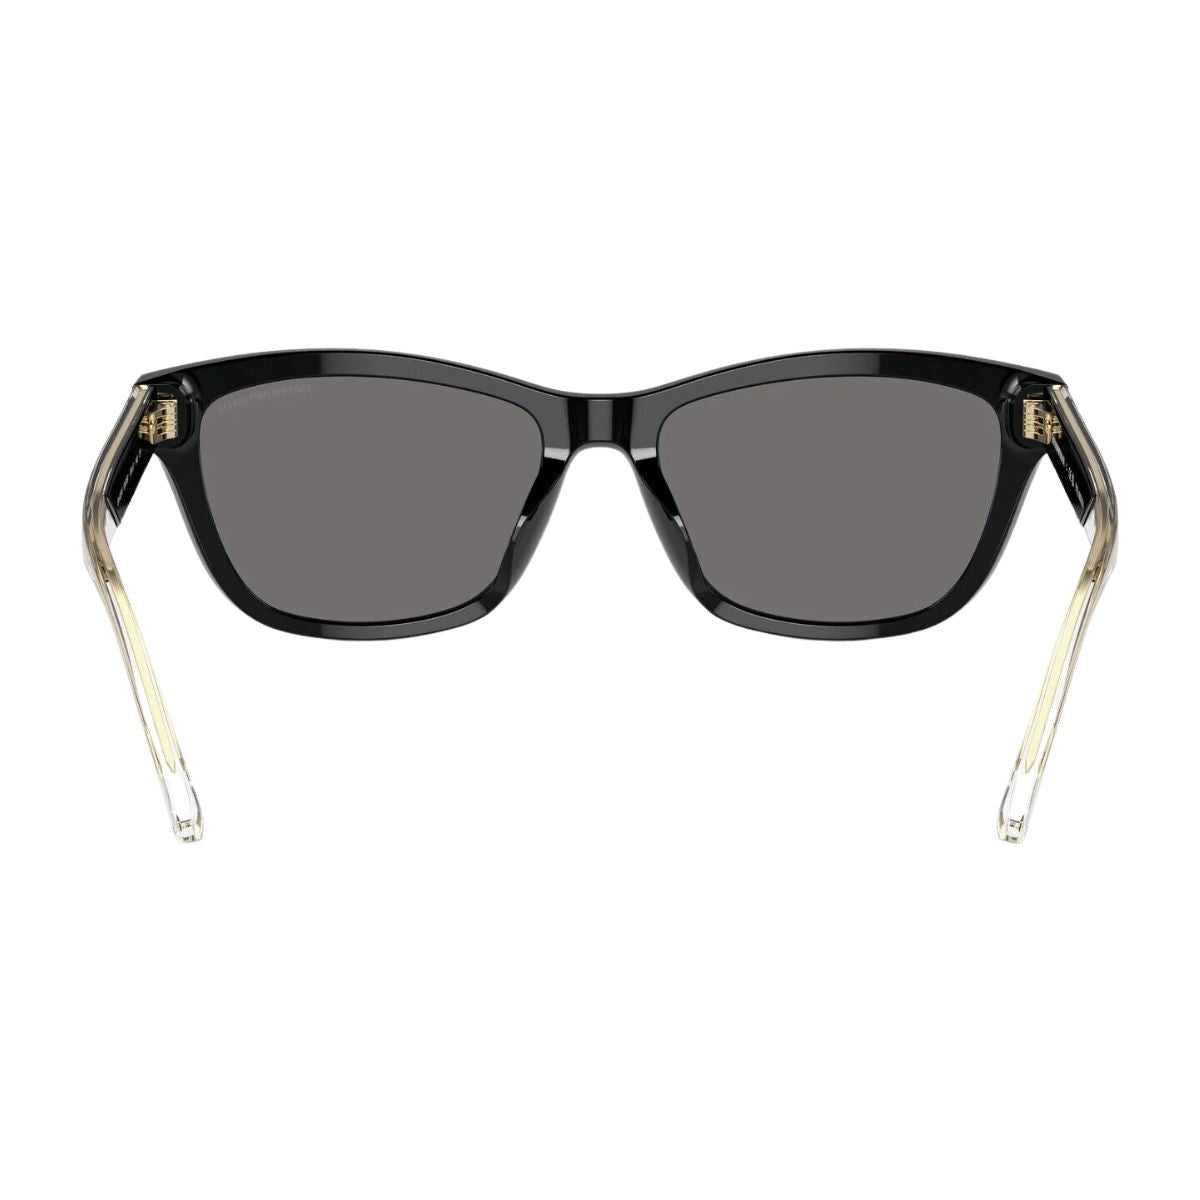 "Shop Stylish Cat Eye Polarized Sunglasses For Women's | Optorium"